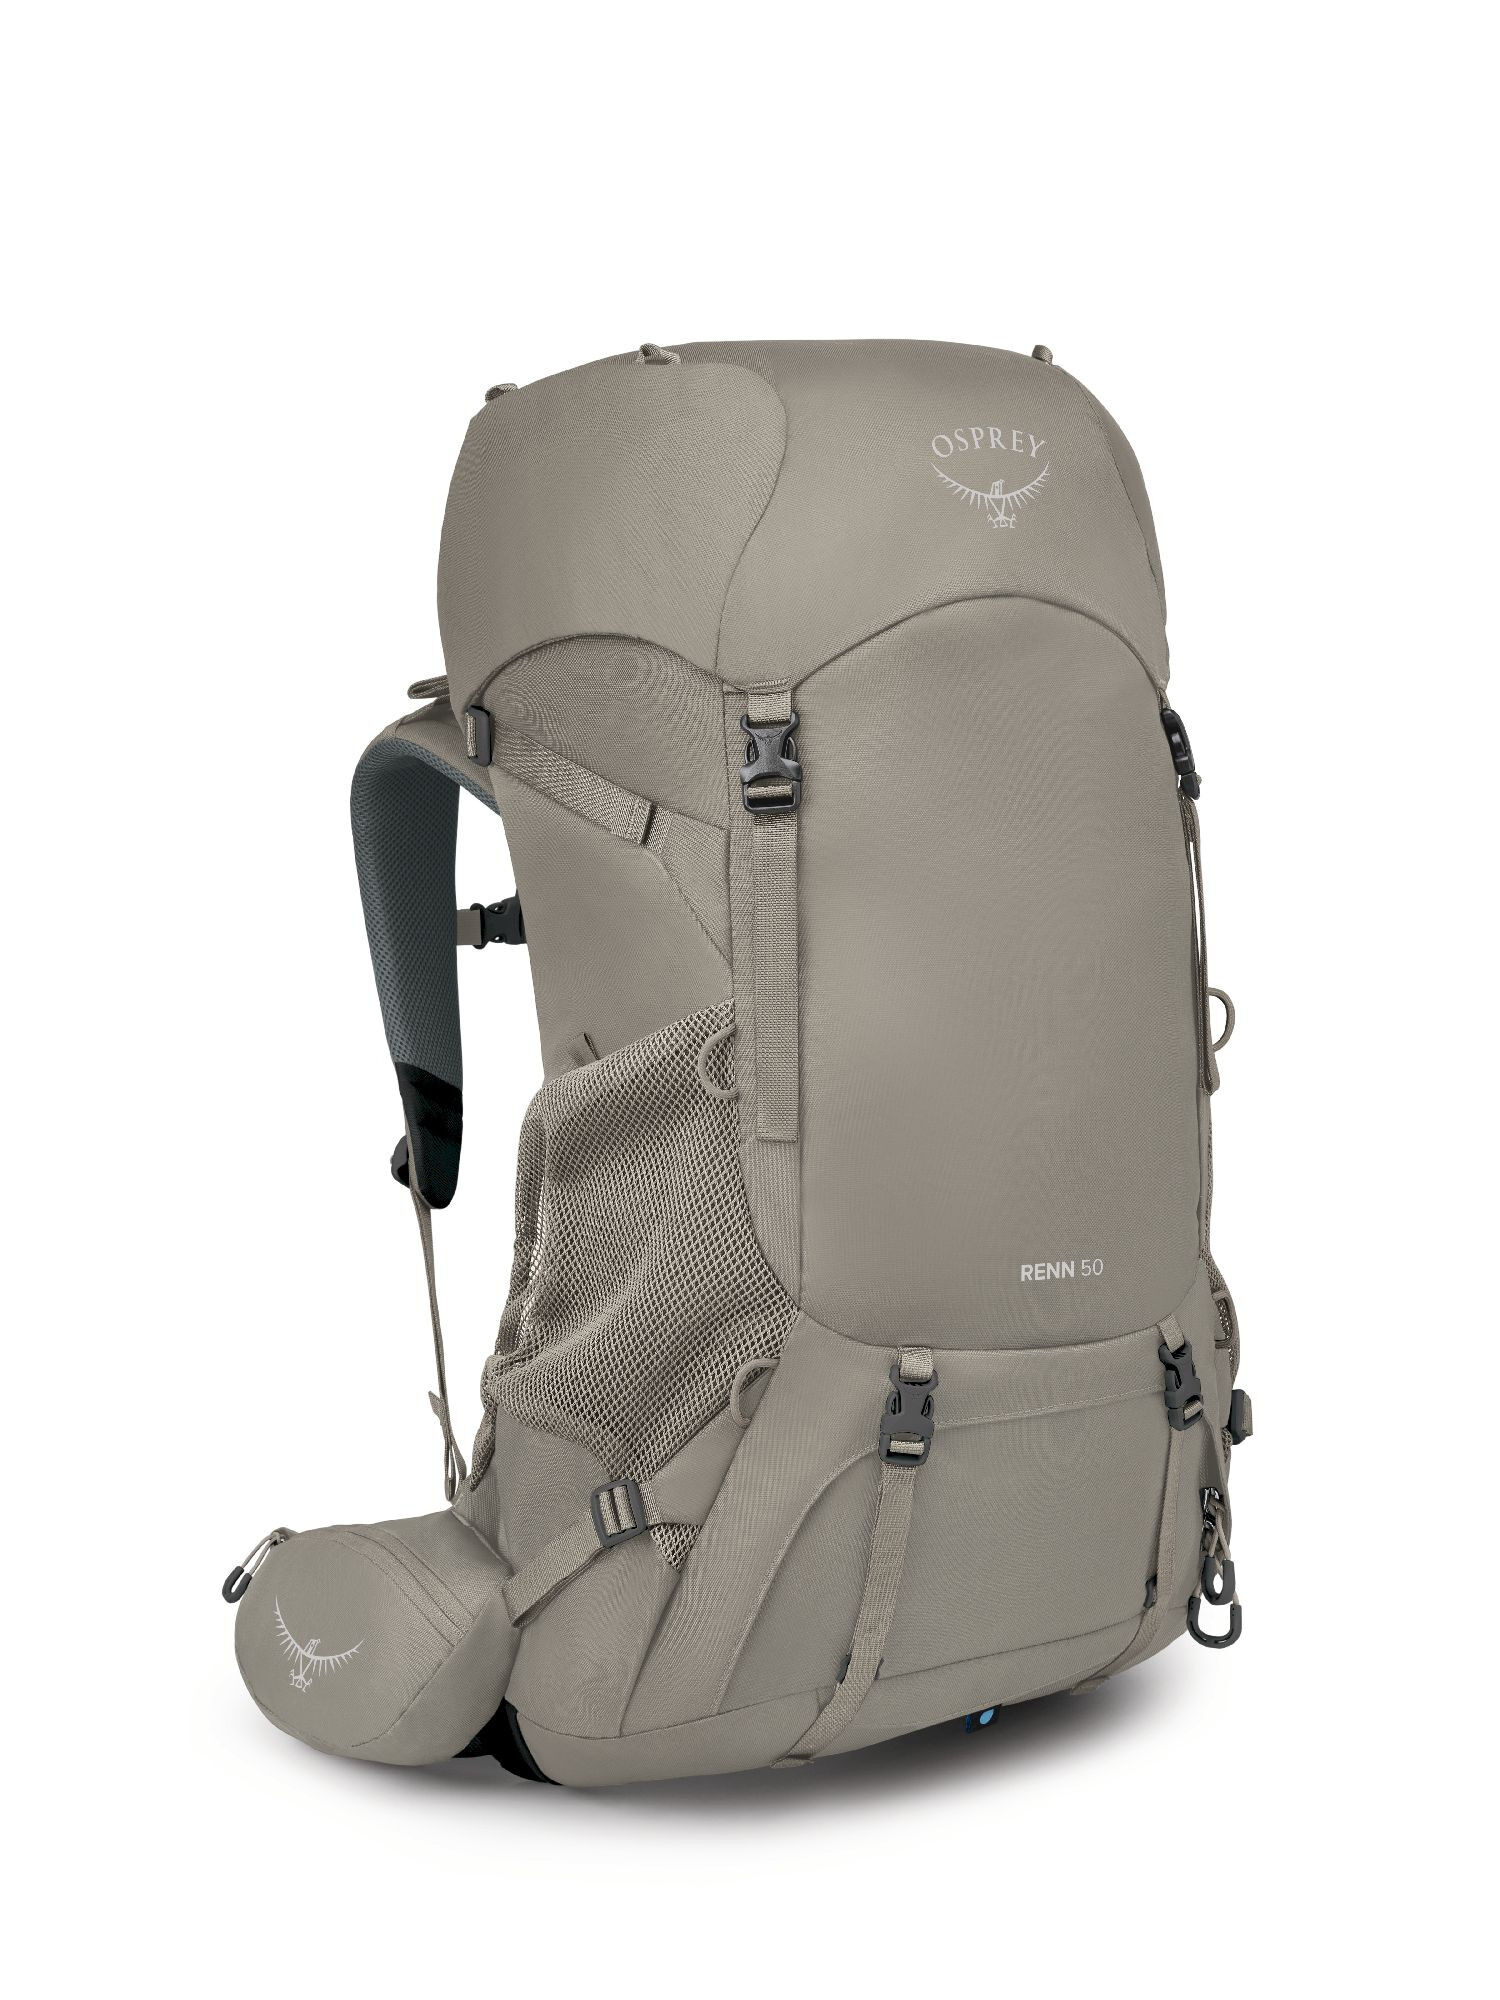 Osprey Renn 50 - Hiking backpack - Women's | Hardloop